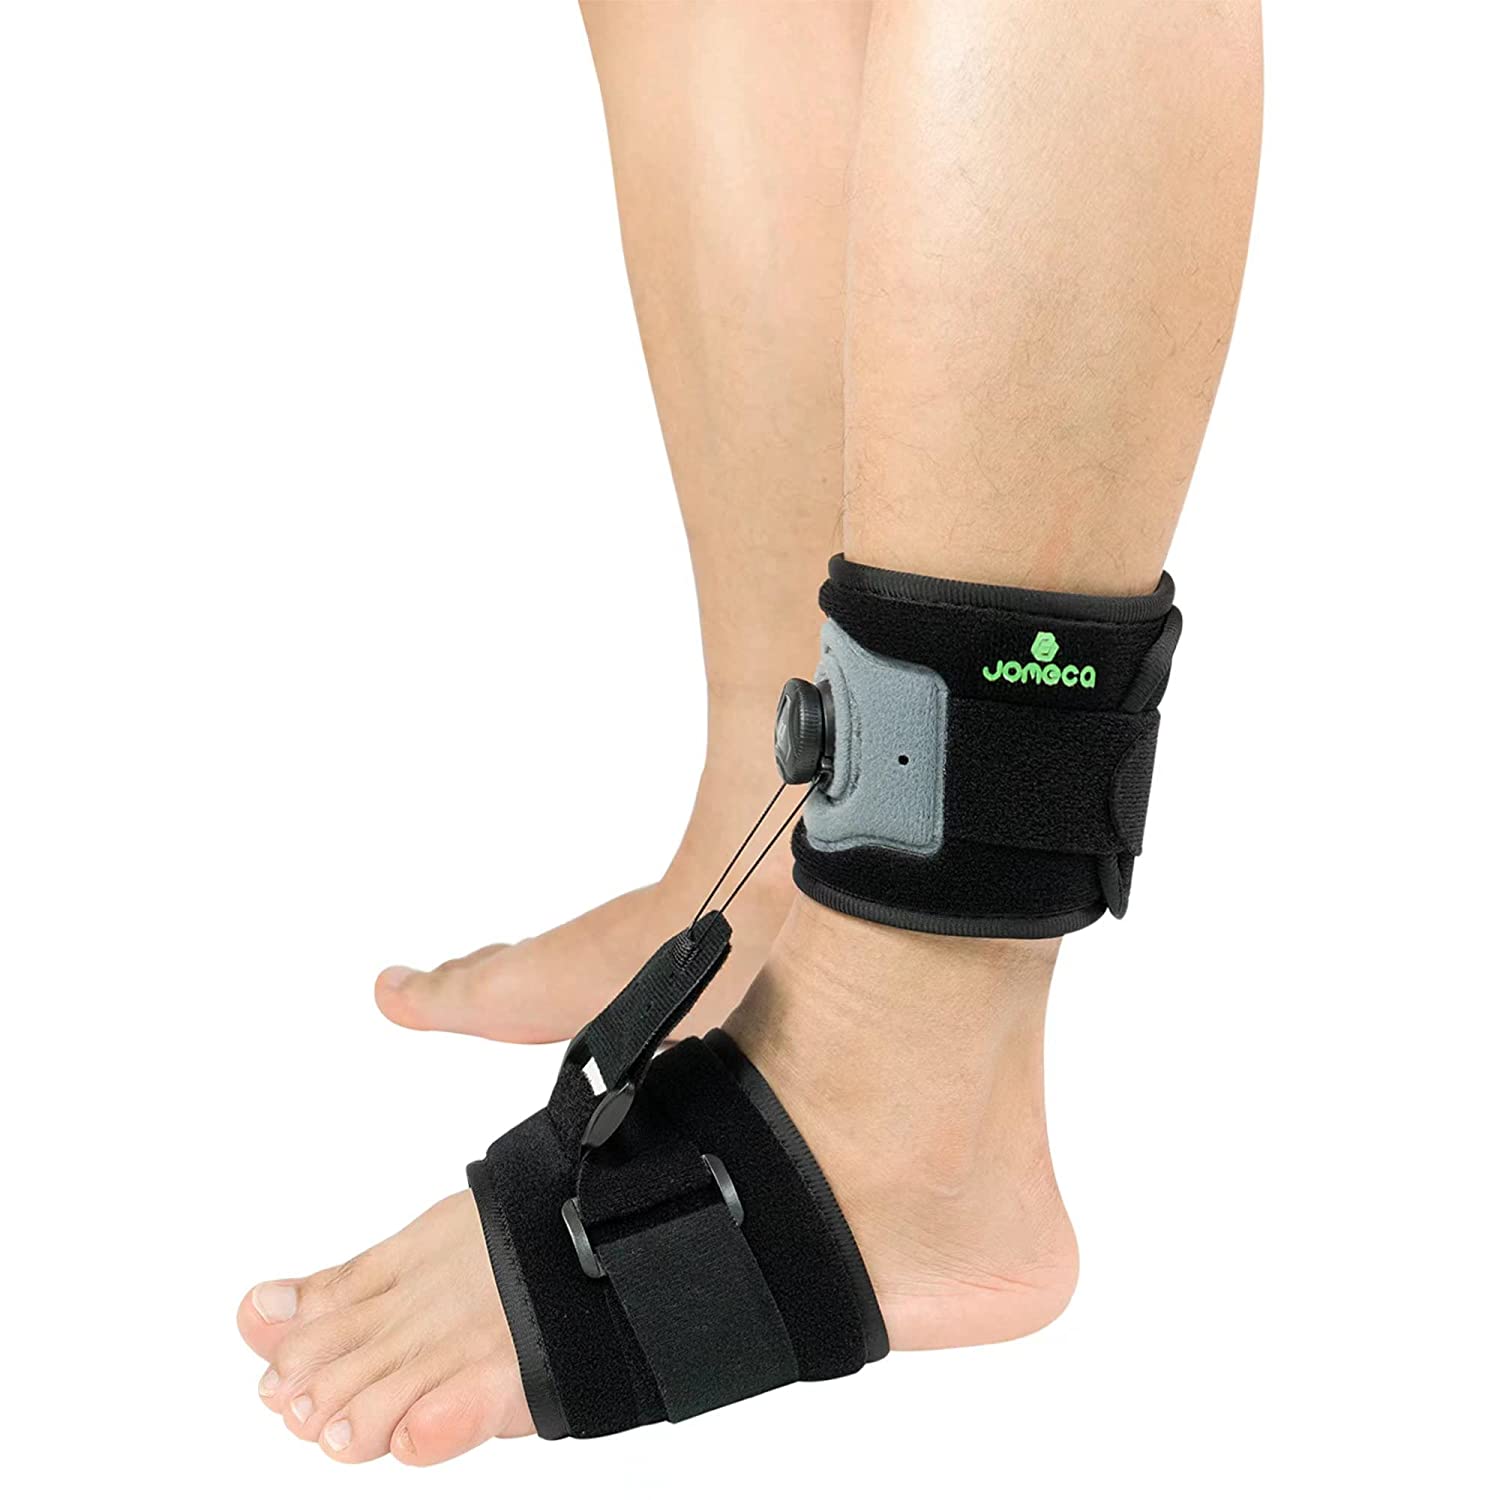 JOMECA Foot Drop Brace has Reel-Adjust Dorsiflexion [...]